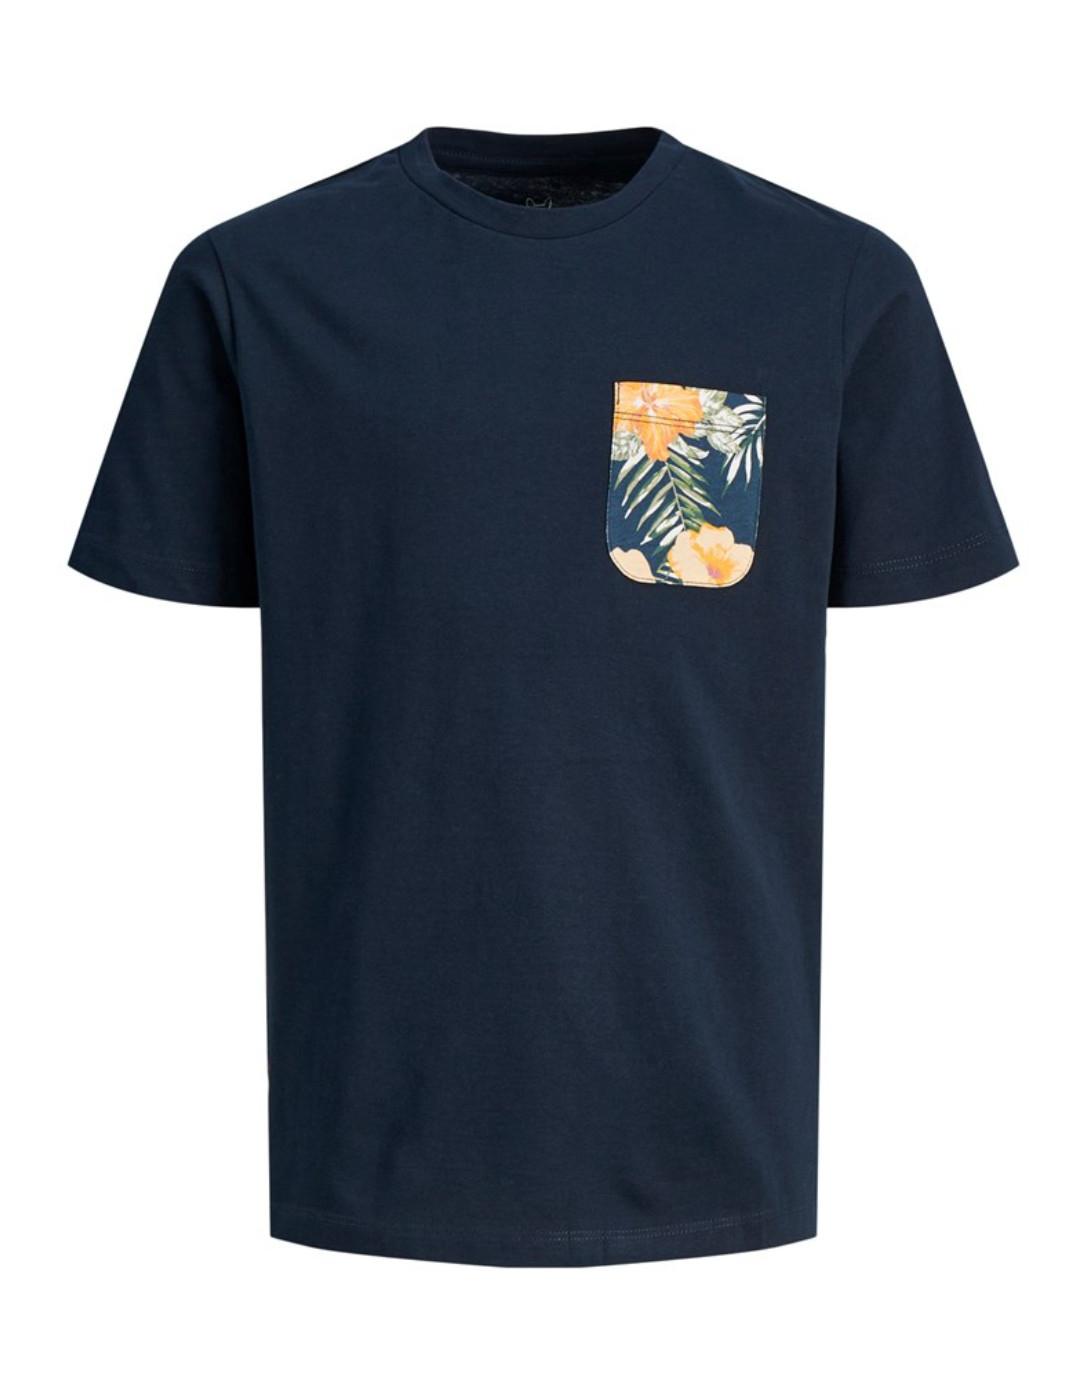 Camiseta Jack&Jones Chill azul marino manga corta para niño